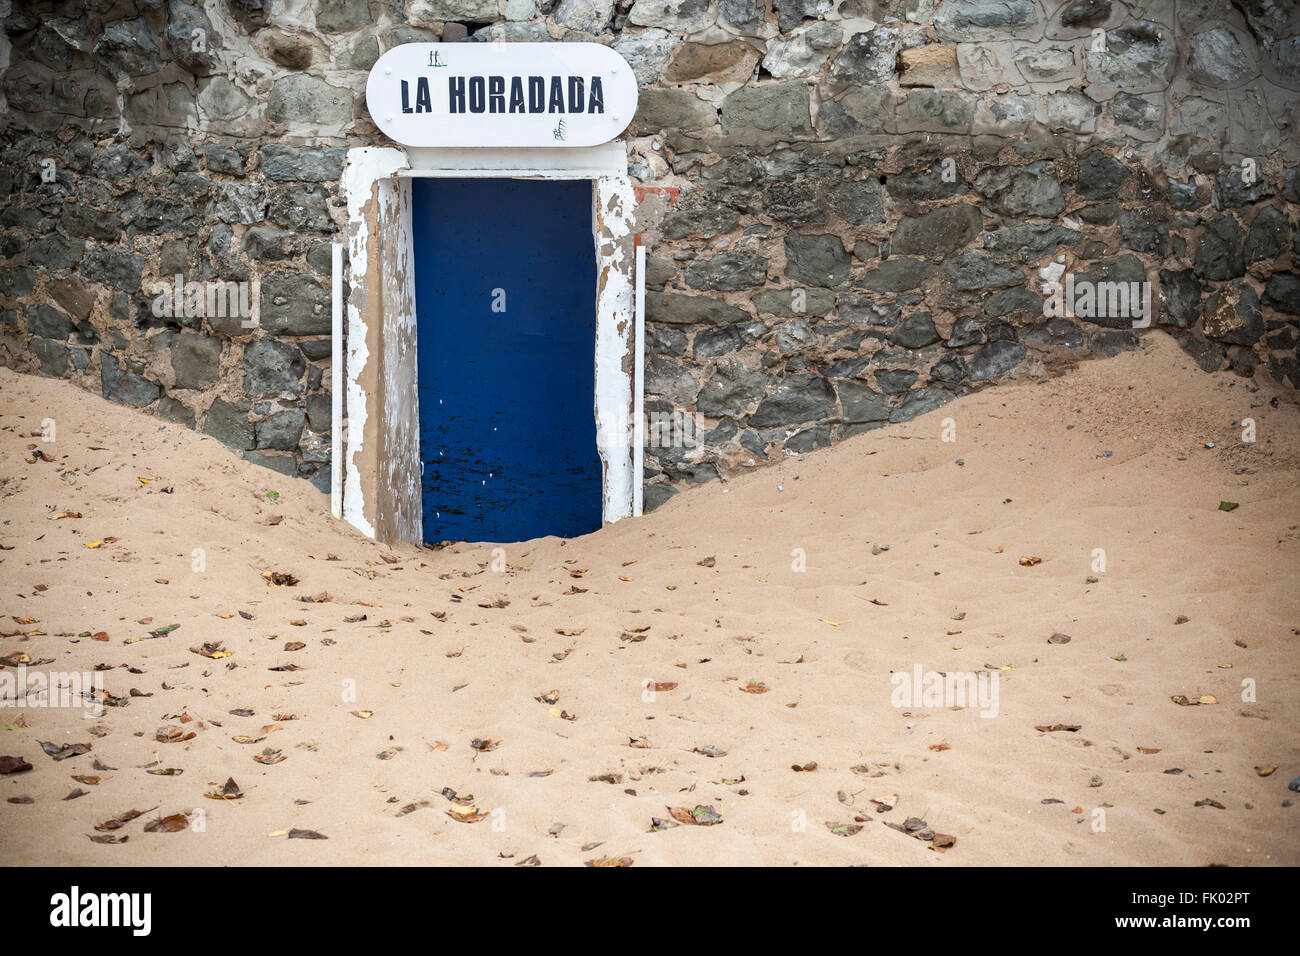 Dans le sable porte Club nautique de la Horadada. Santander, Espagne. Banque D'Images